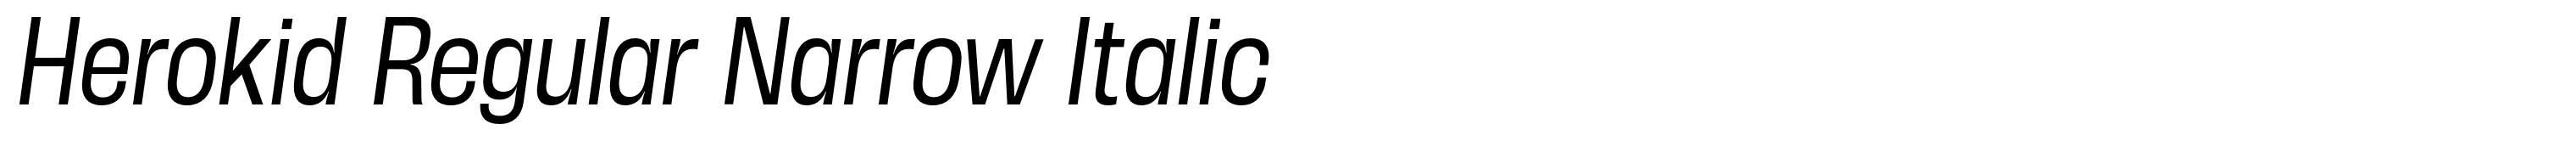 Herokid Regular Narrow Italic